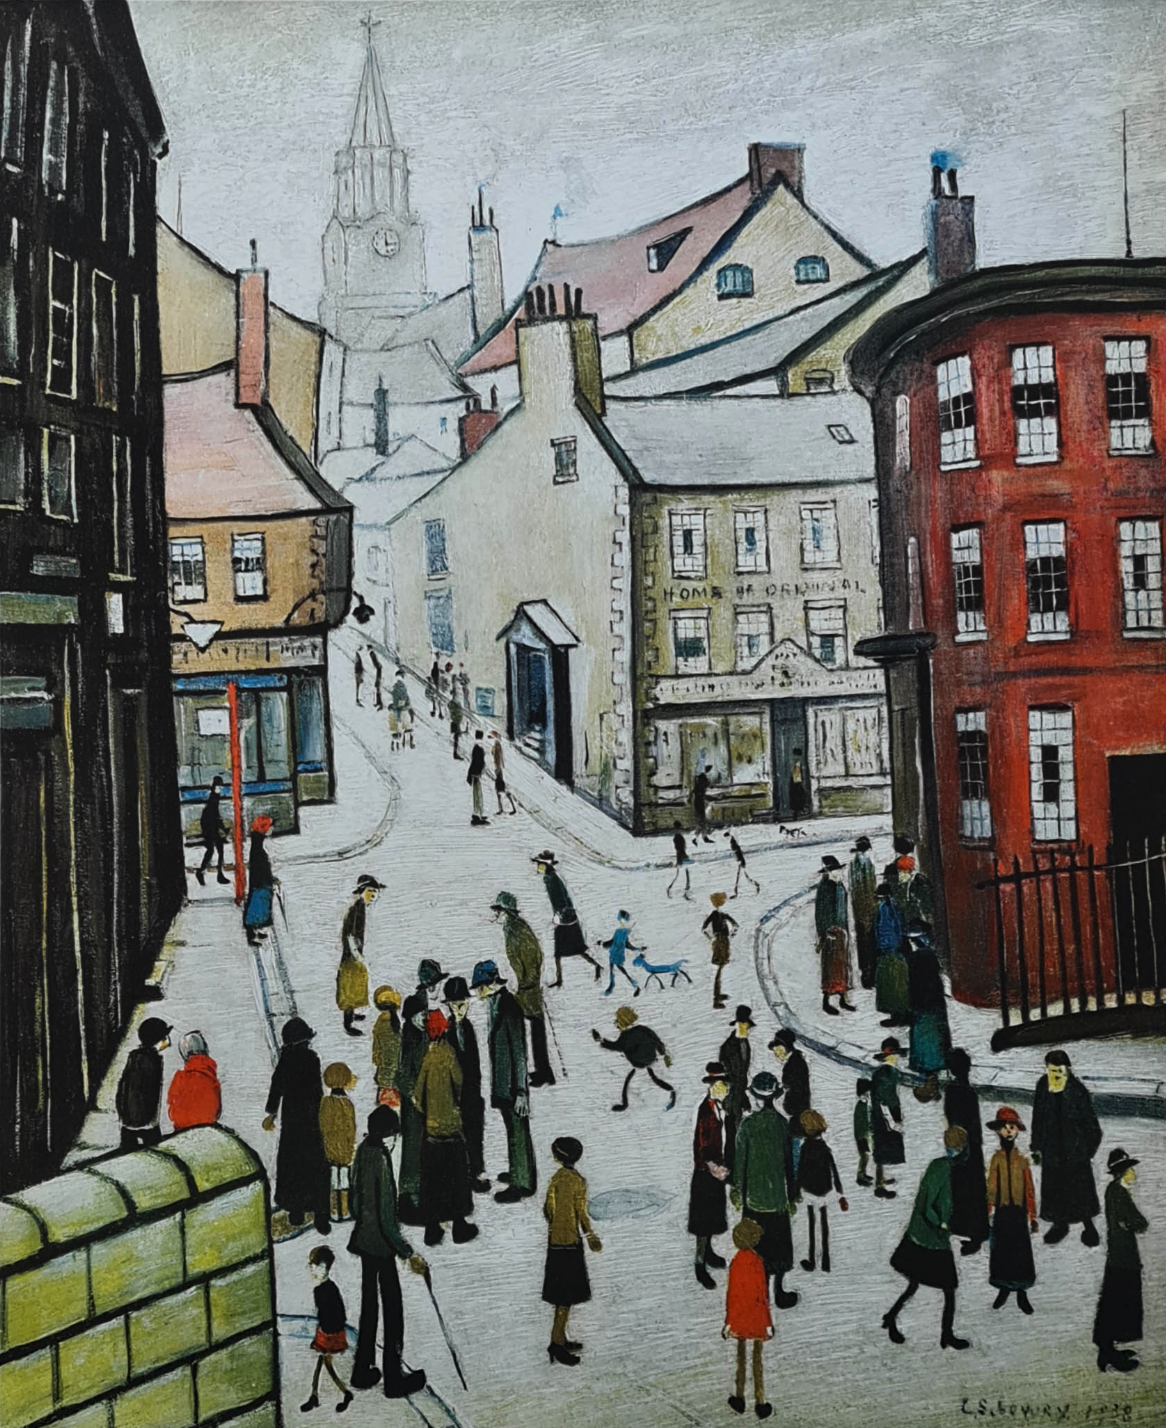 Berwick (Berwick upon Tweed) (1938) by Laurence Stephen Lowry (1887 - 1976), English artist.